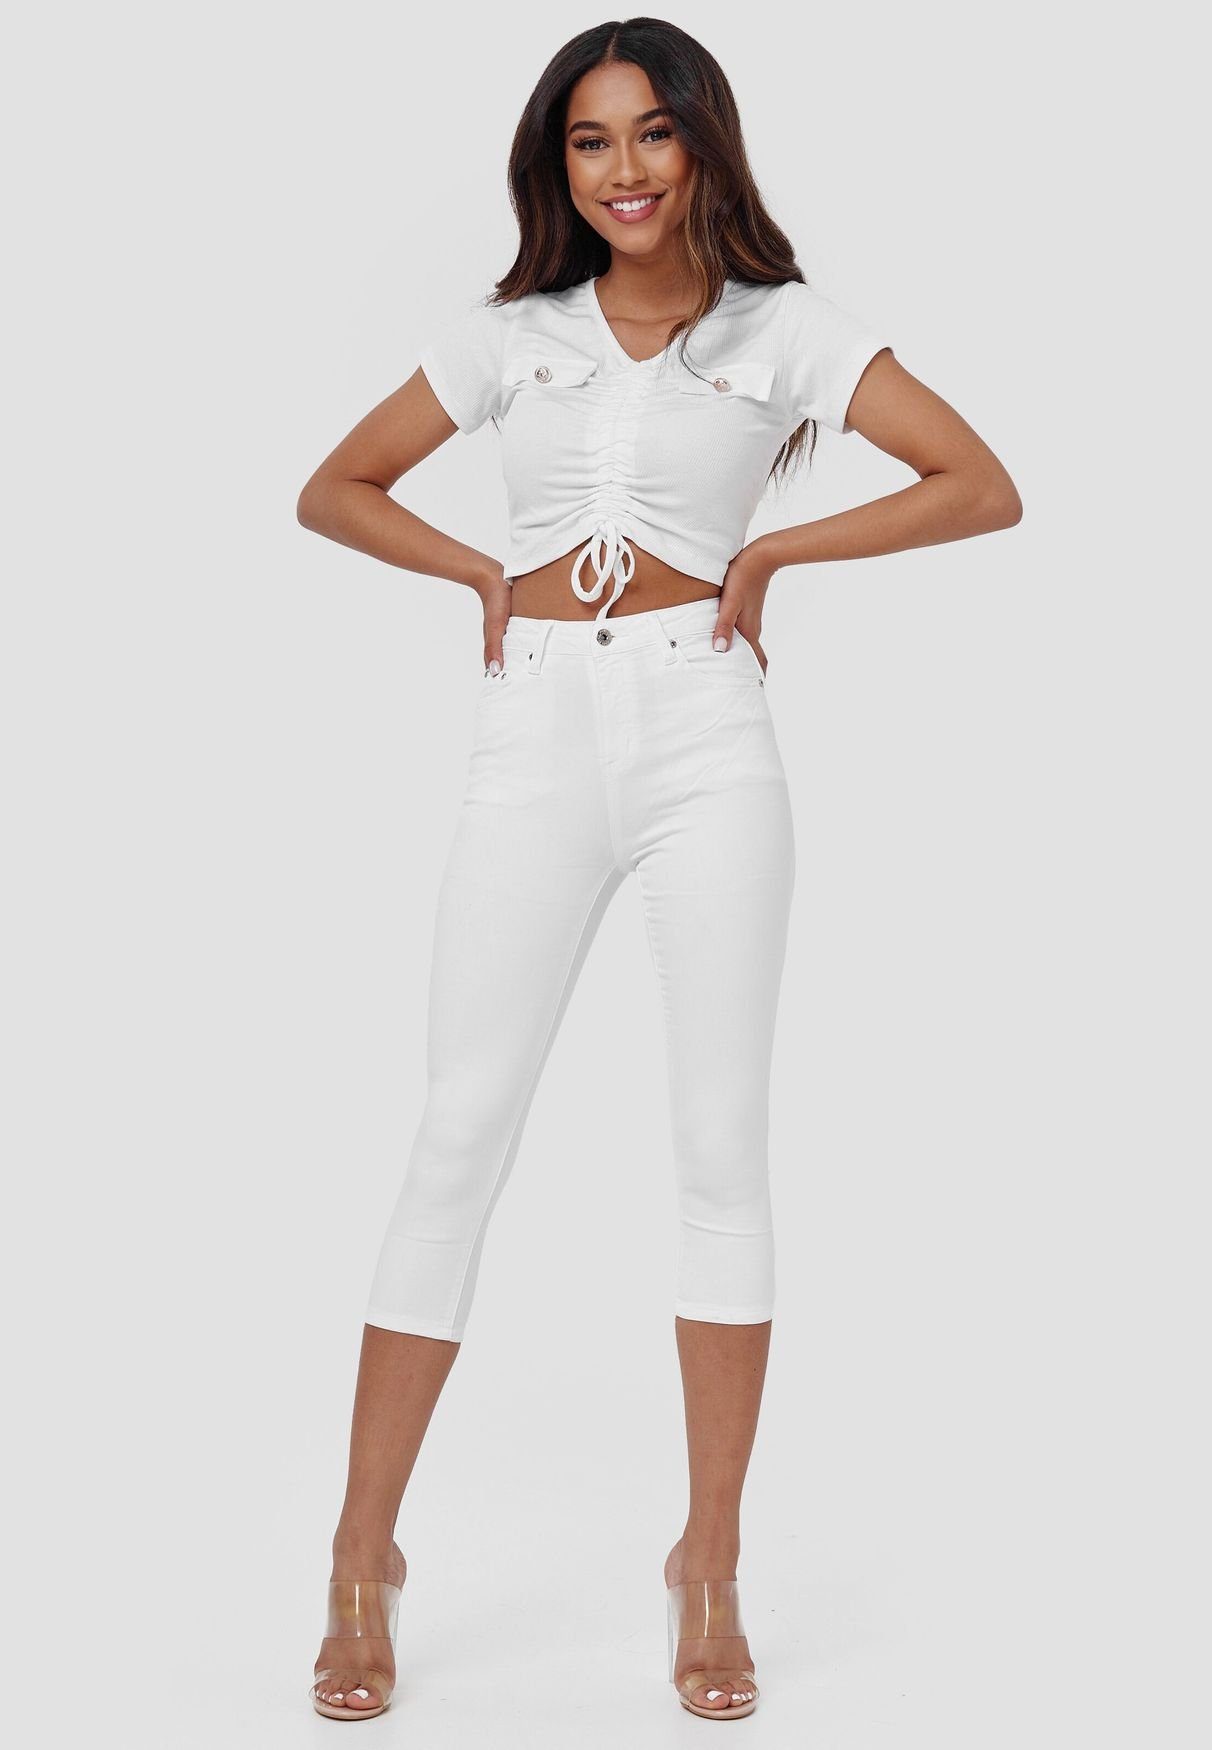 Egomaxx Caprihose »Damen Capri Denim Jeans Kurze Skinny Stretch Shorts 3/4  Pants« (1-tlg) 3627 in Weiß online kaufen | OTTO